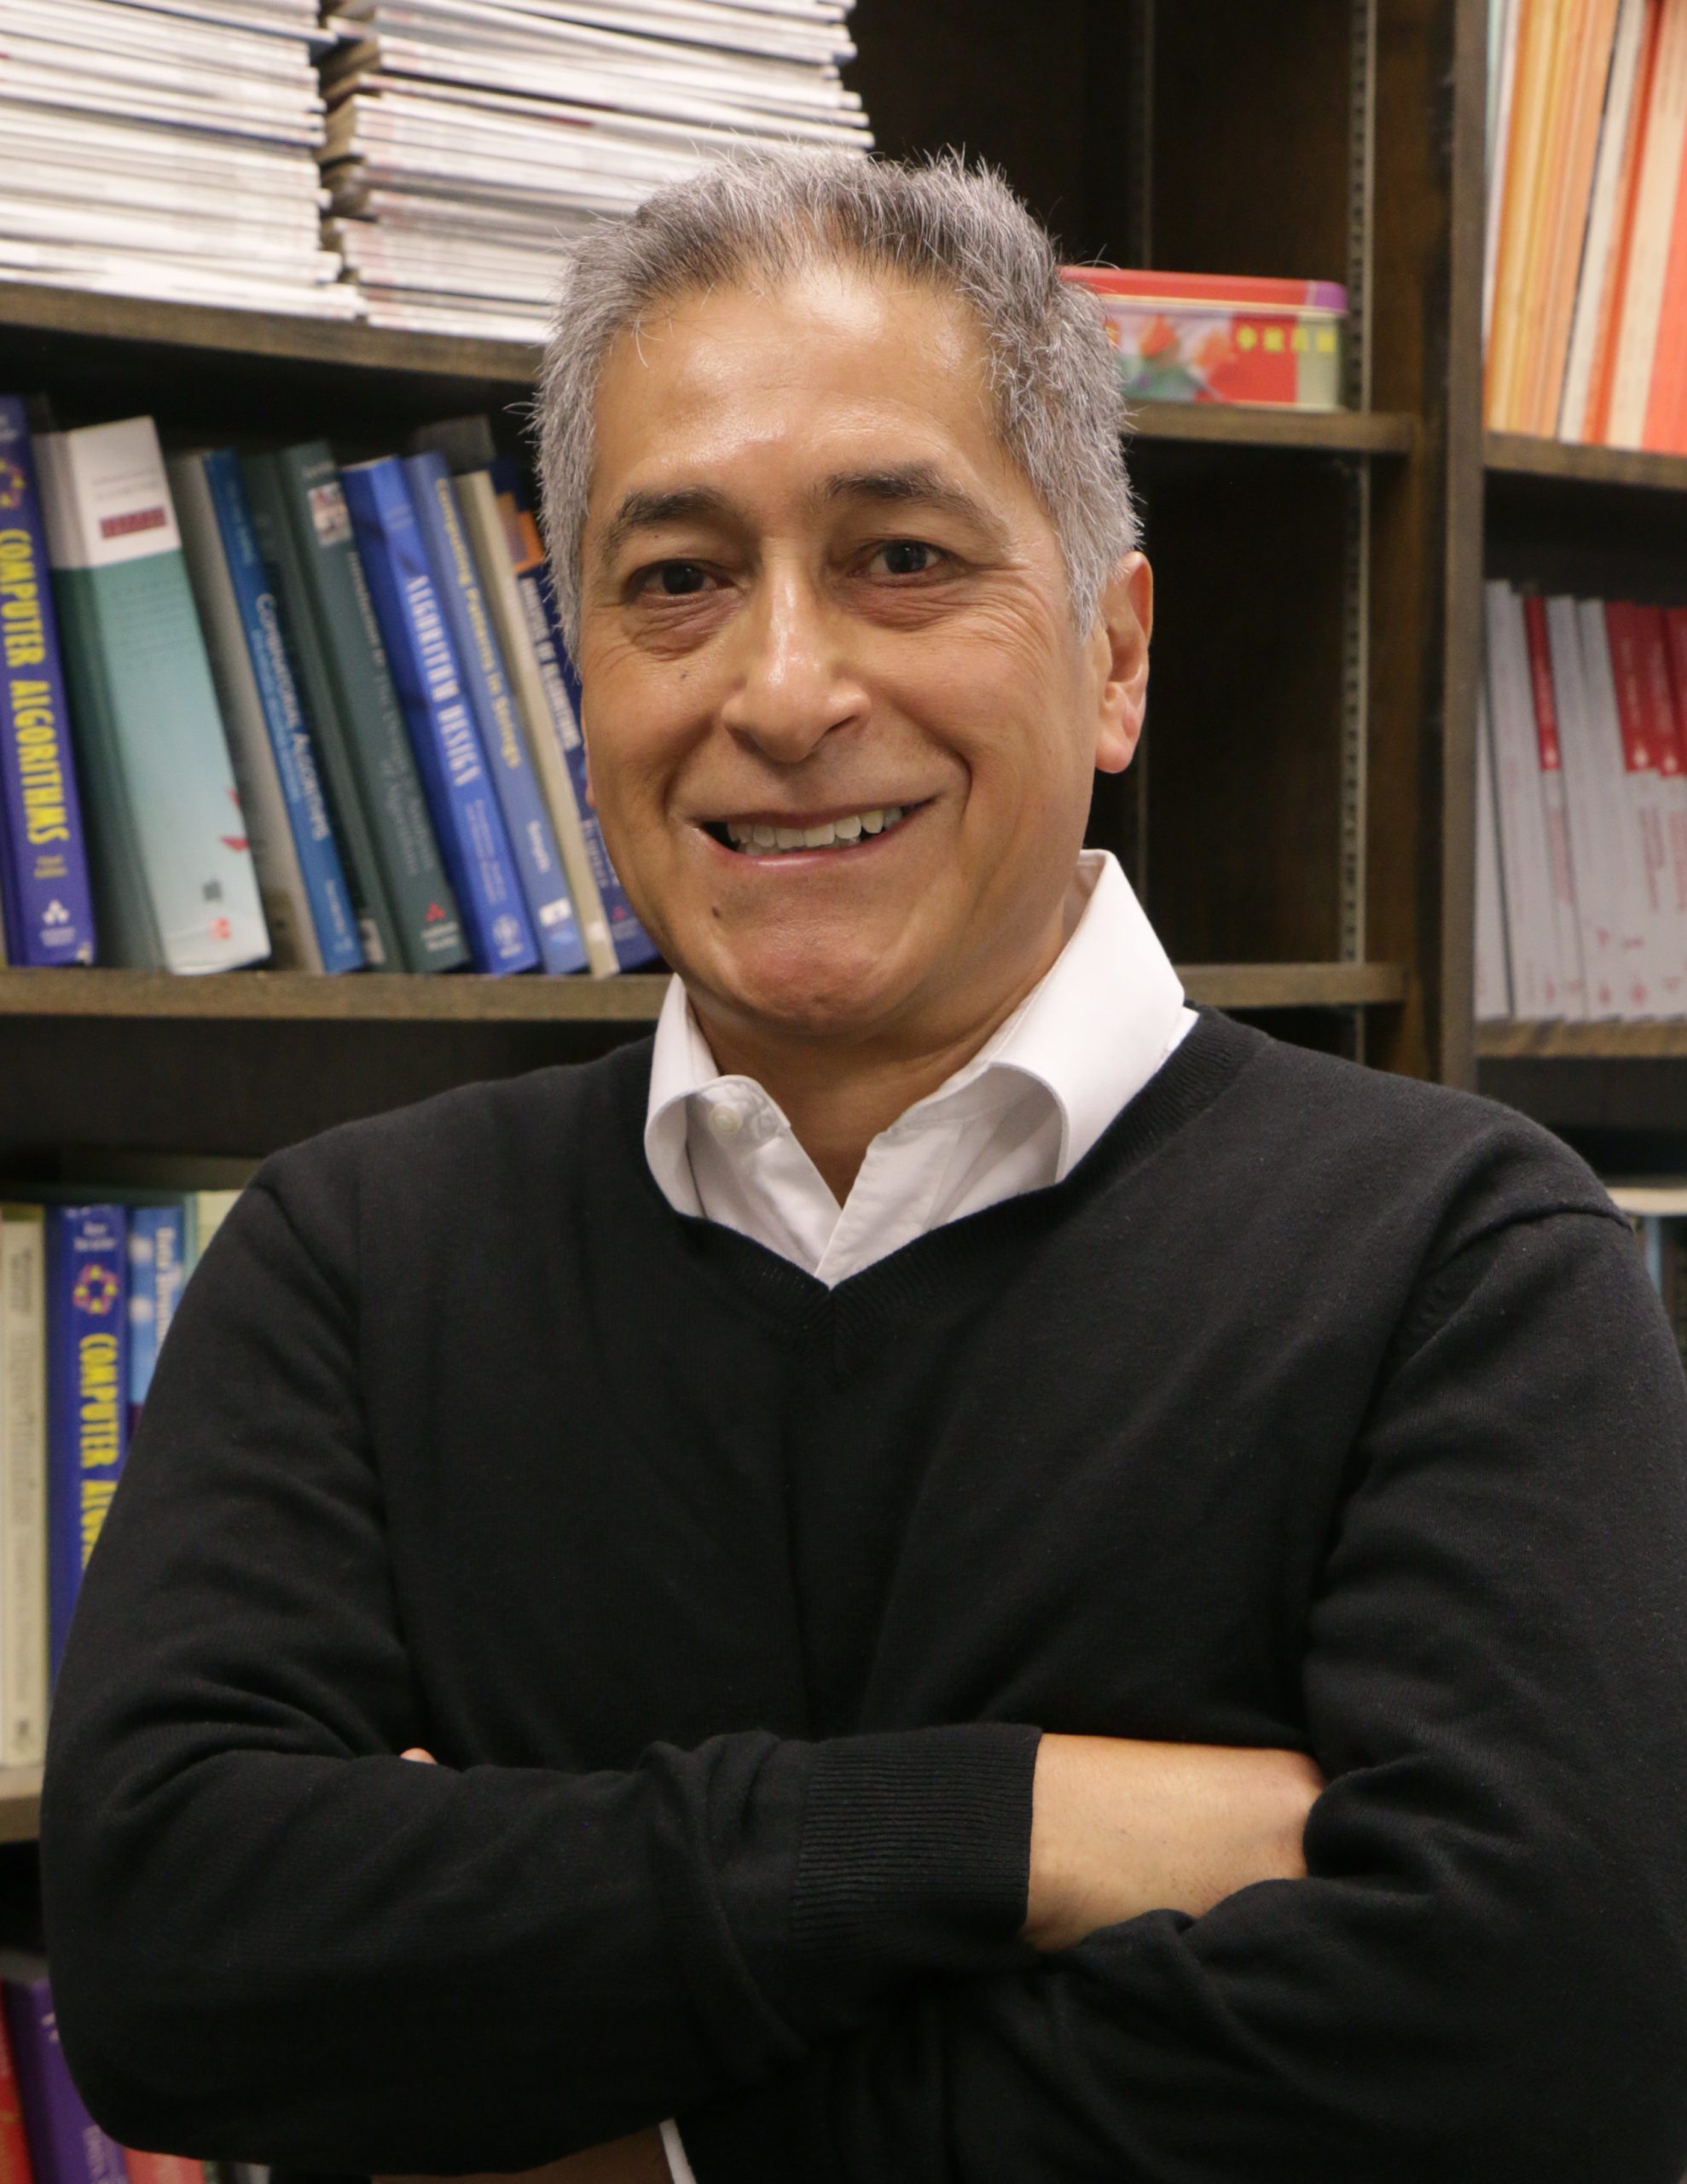 David Fernandez-Baca poses in front of bookshelf